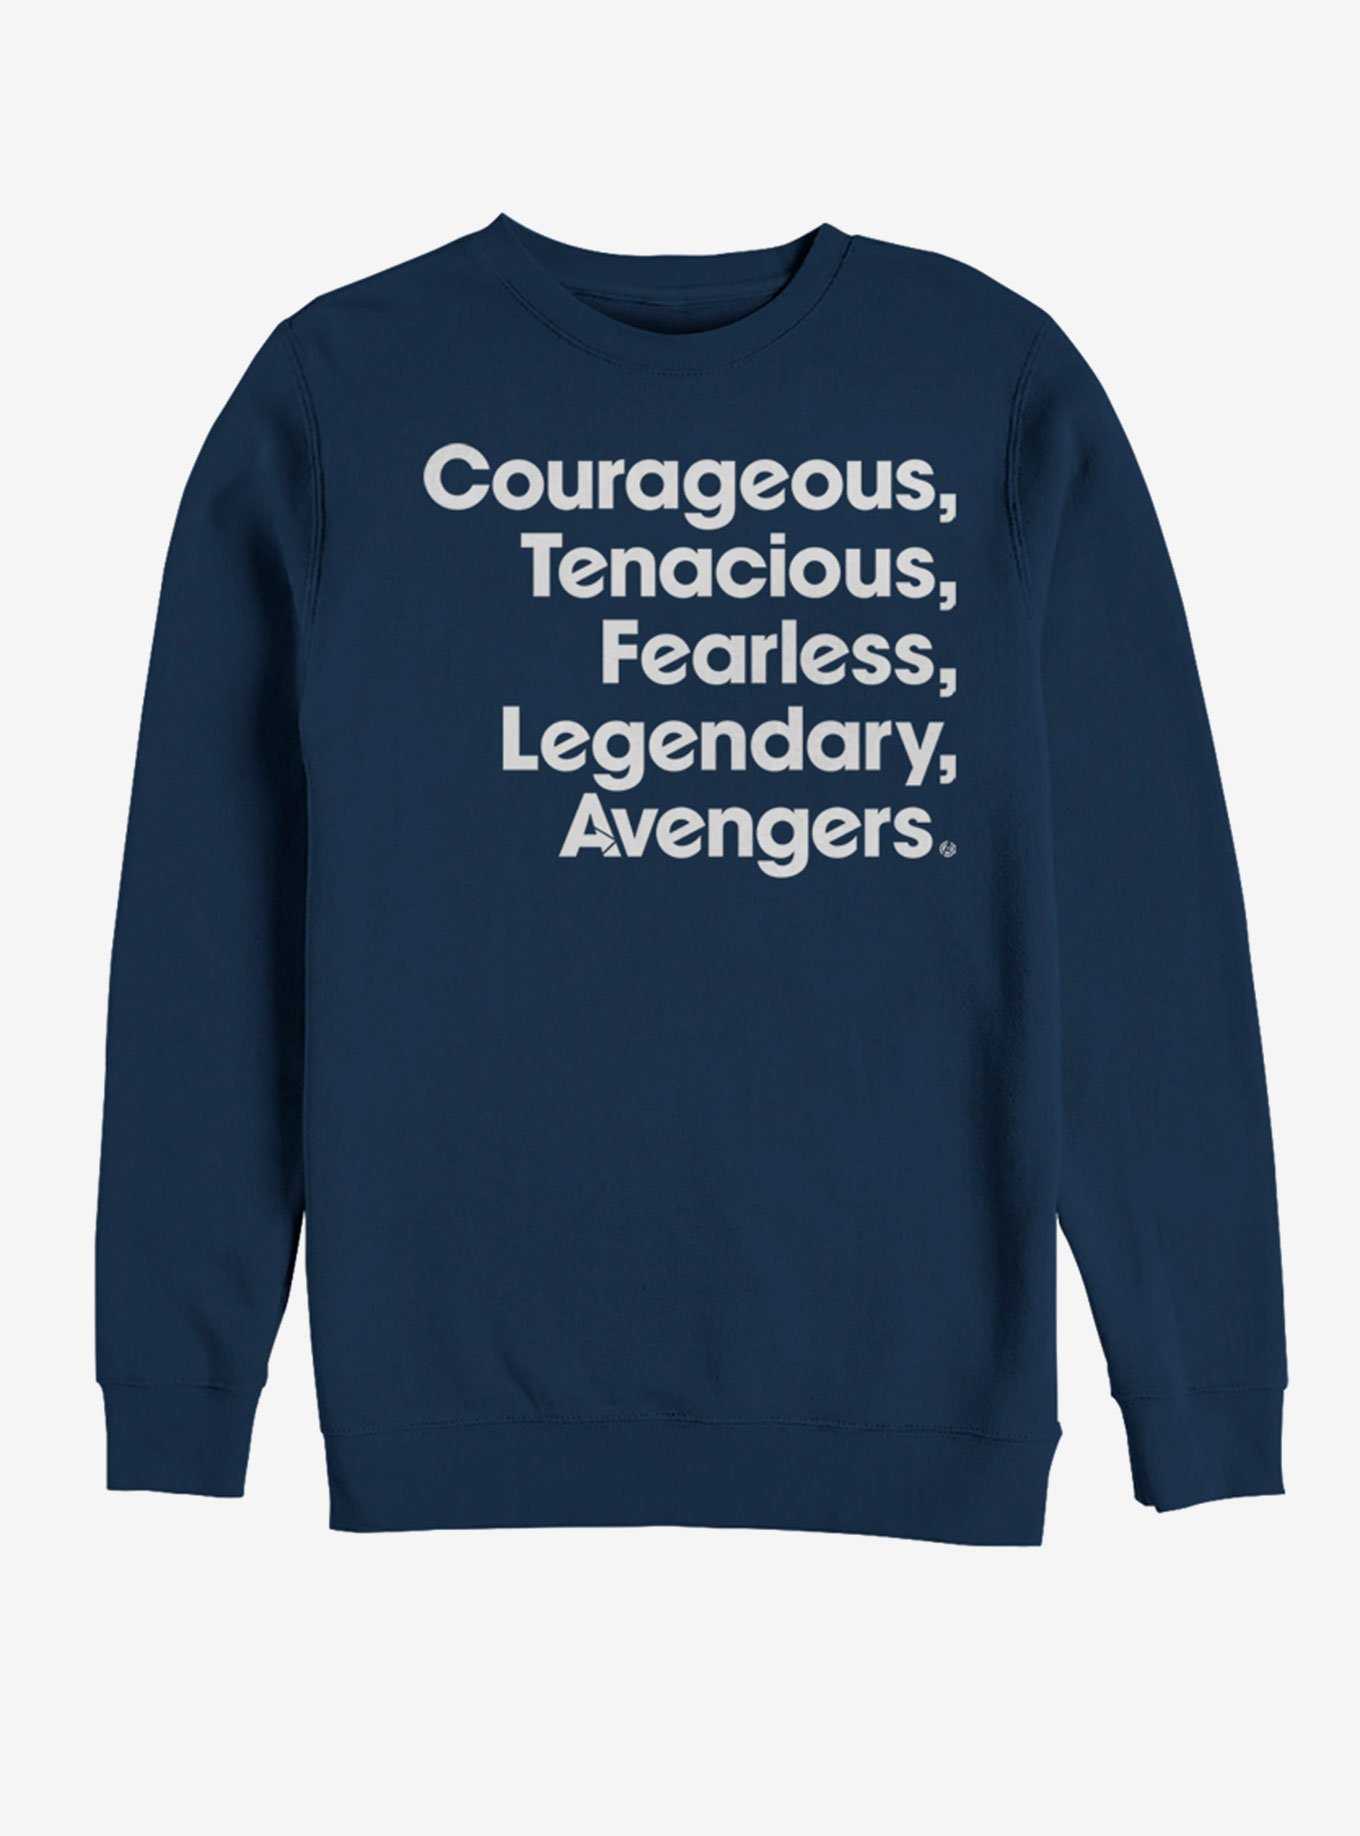 Marvel Avengers: Endgame Name List Sweatshirt, , hi-res